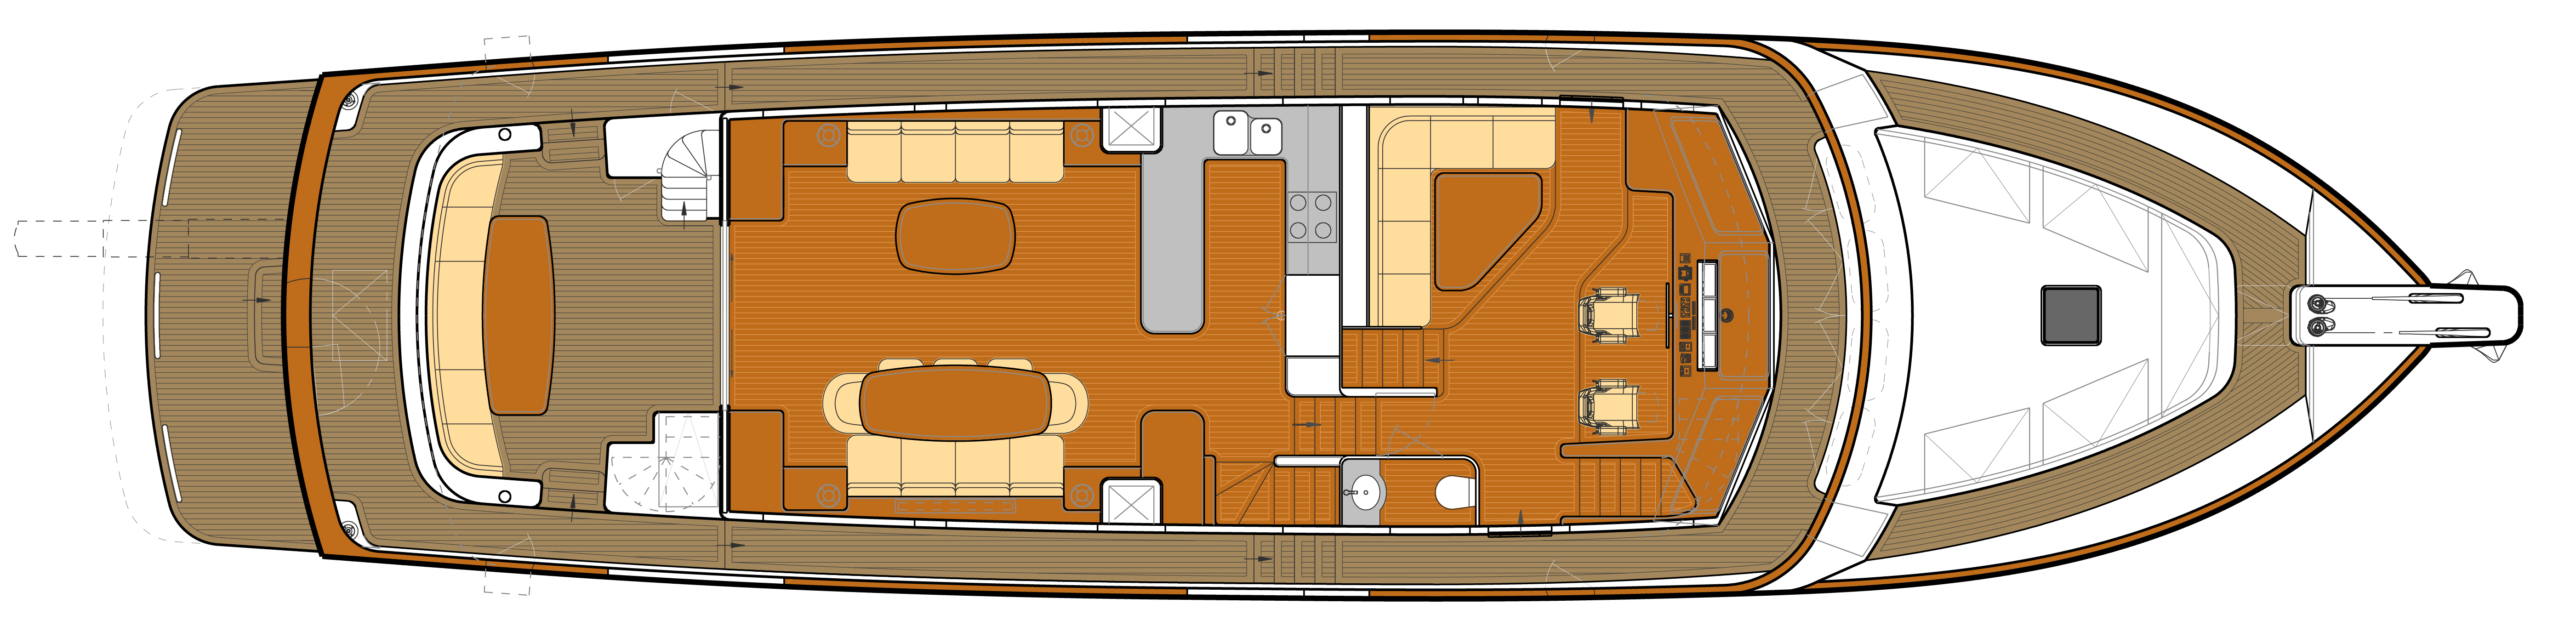 85 foot yacht